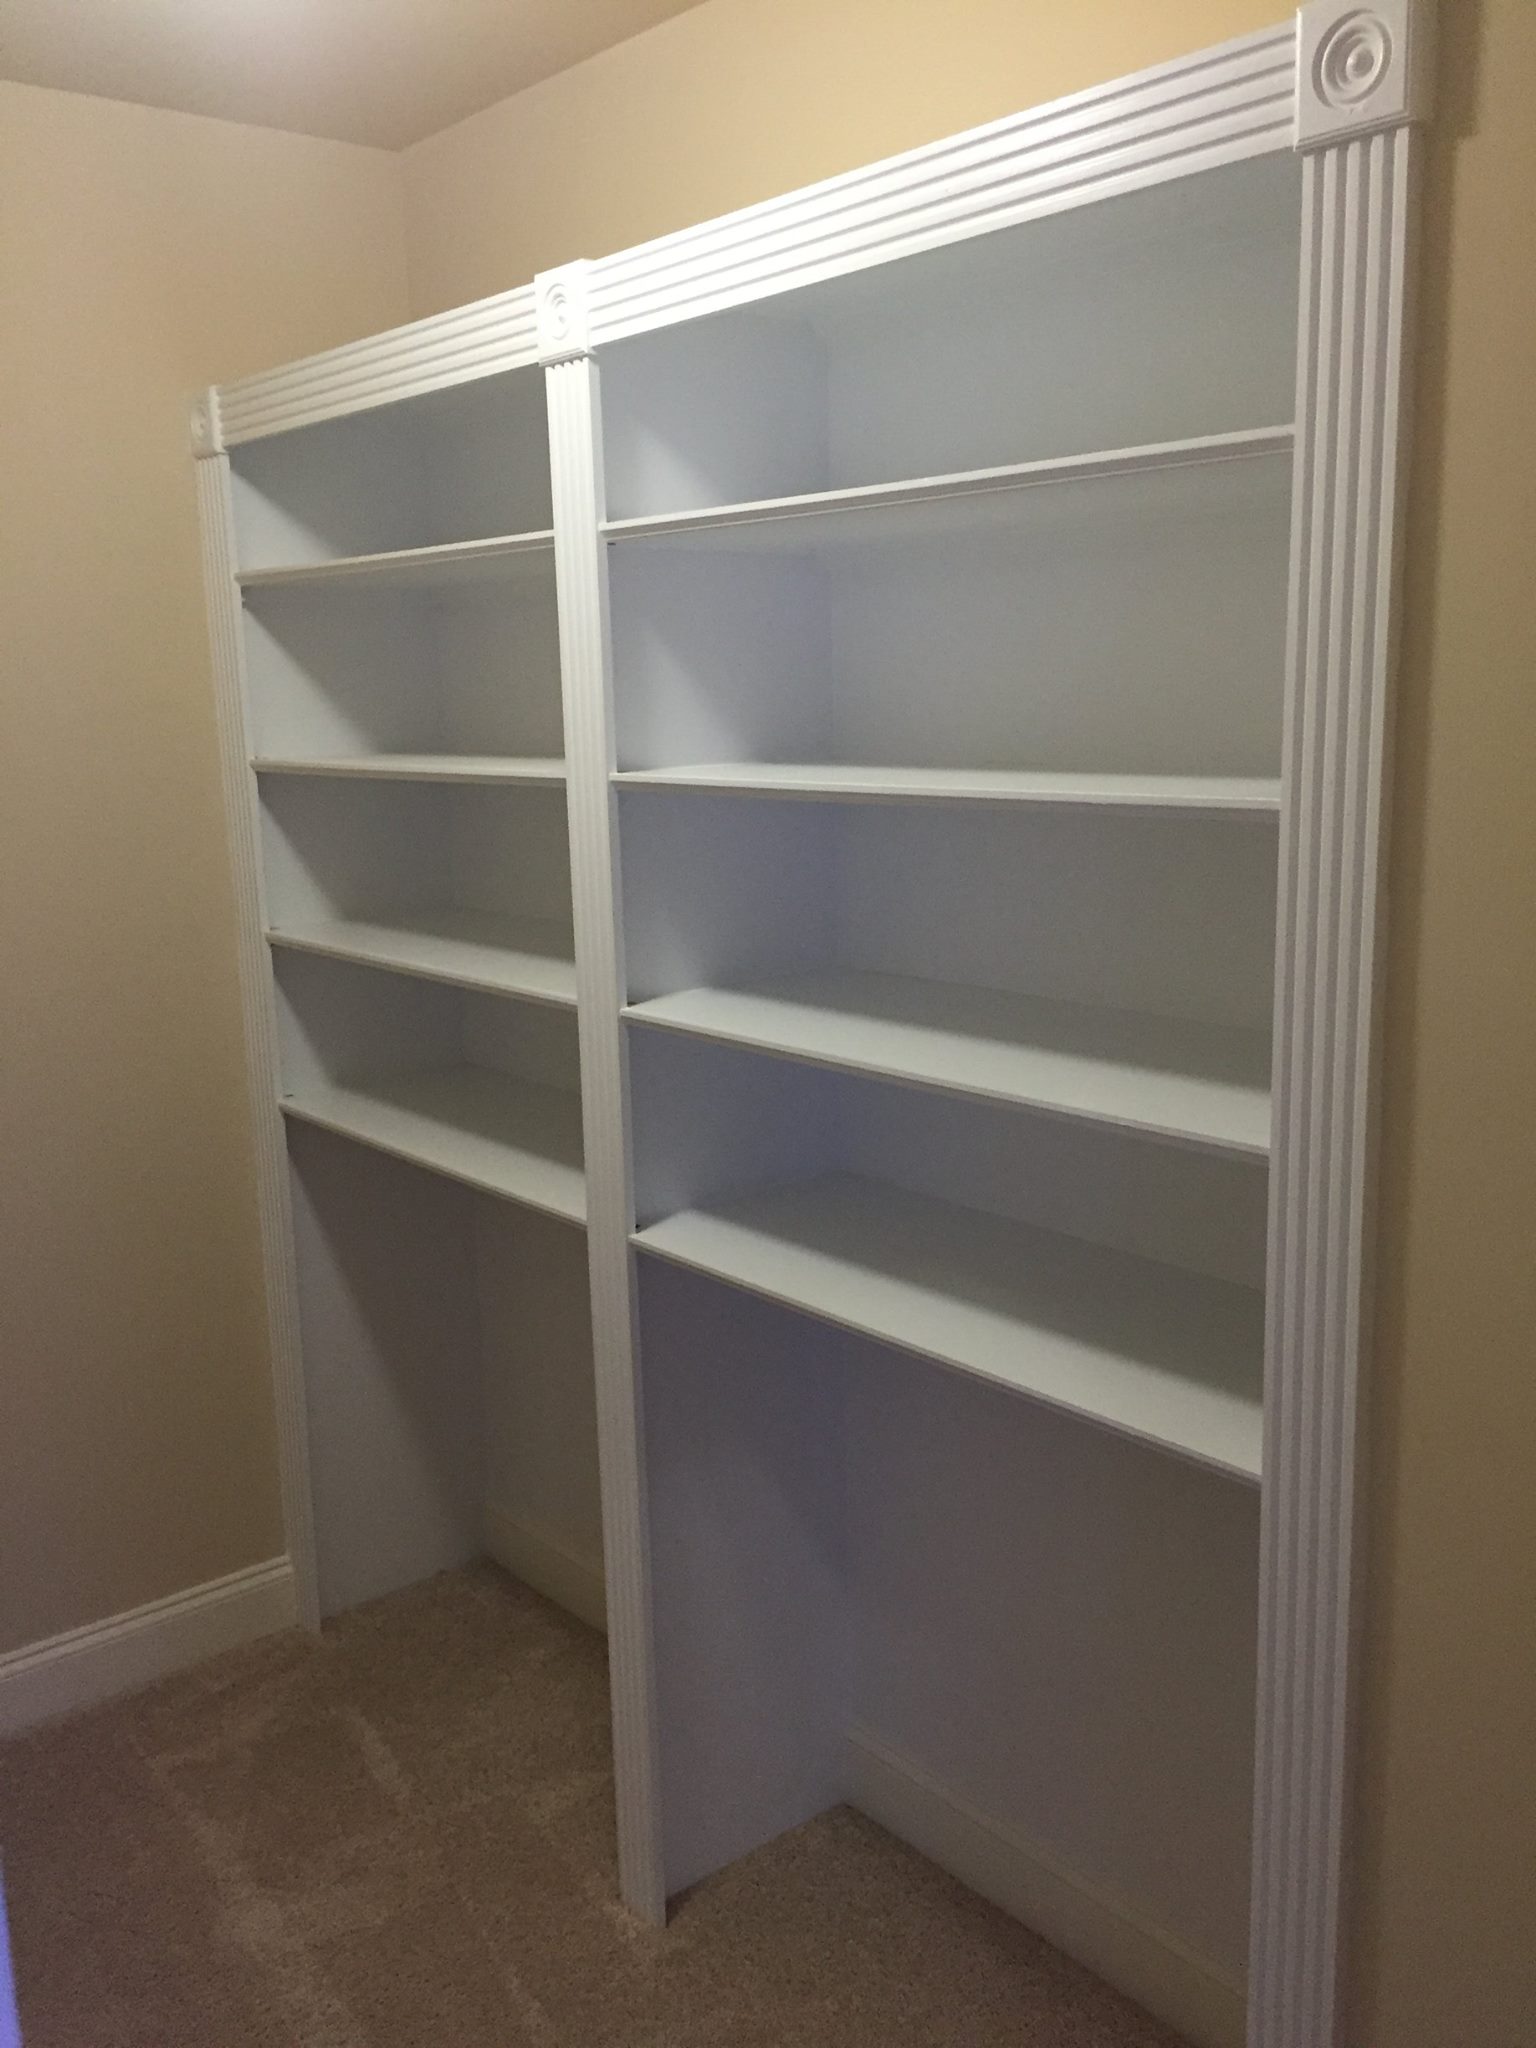 Custom Built In Shelves in Closet Space